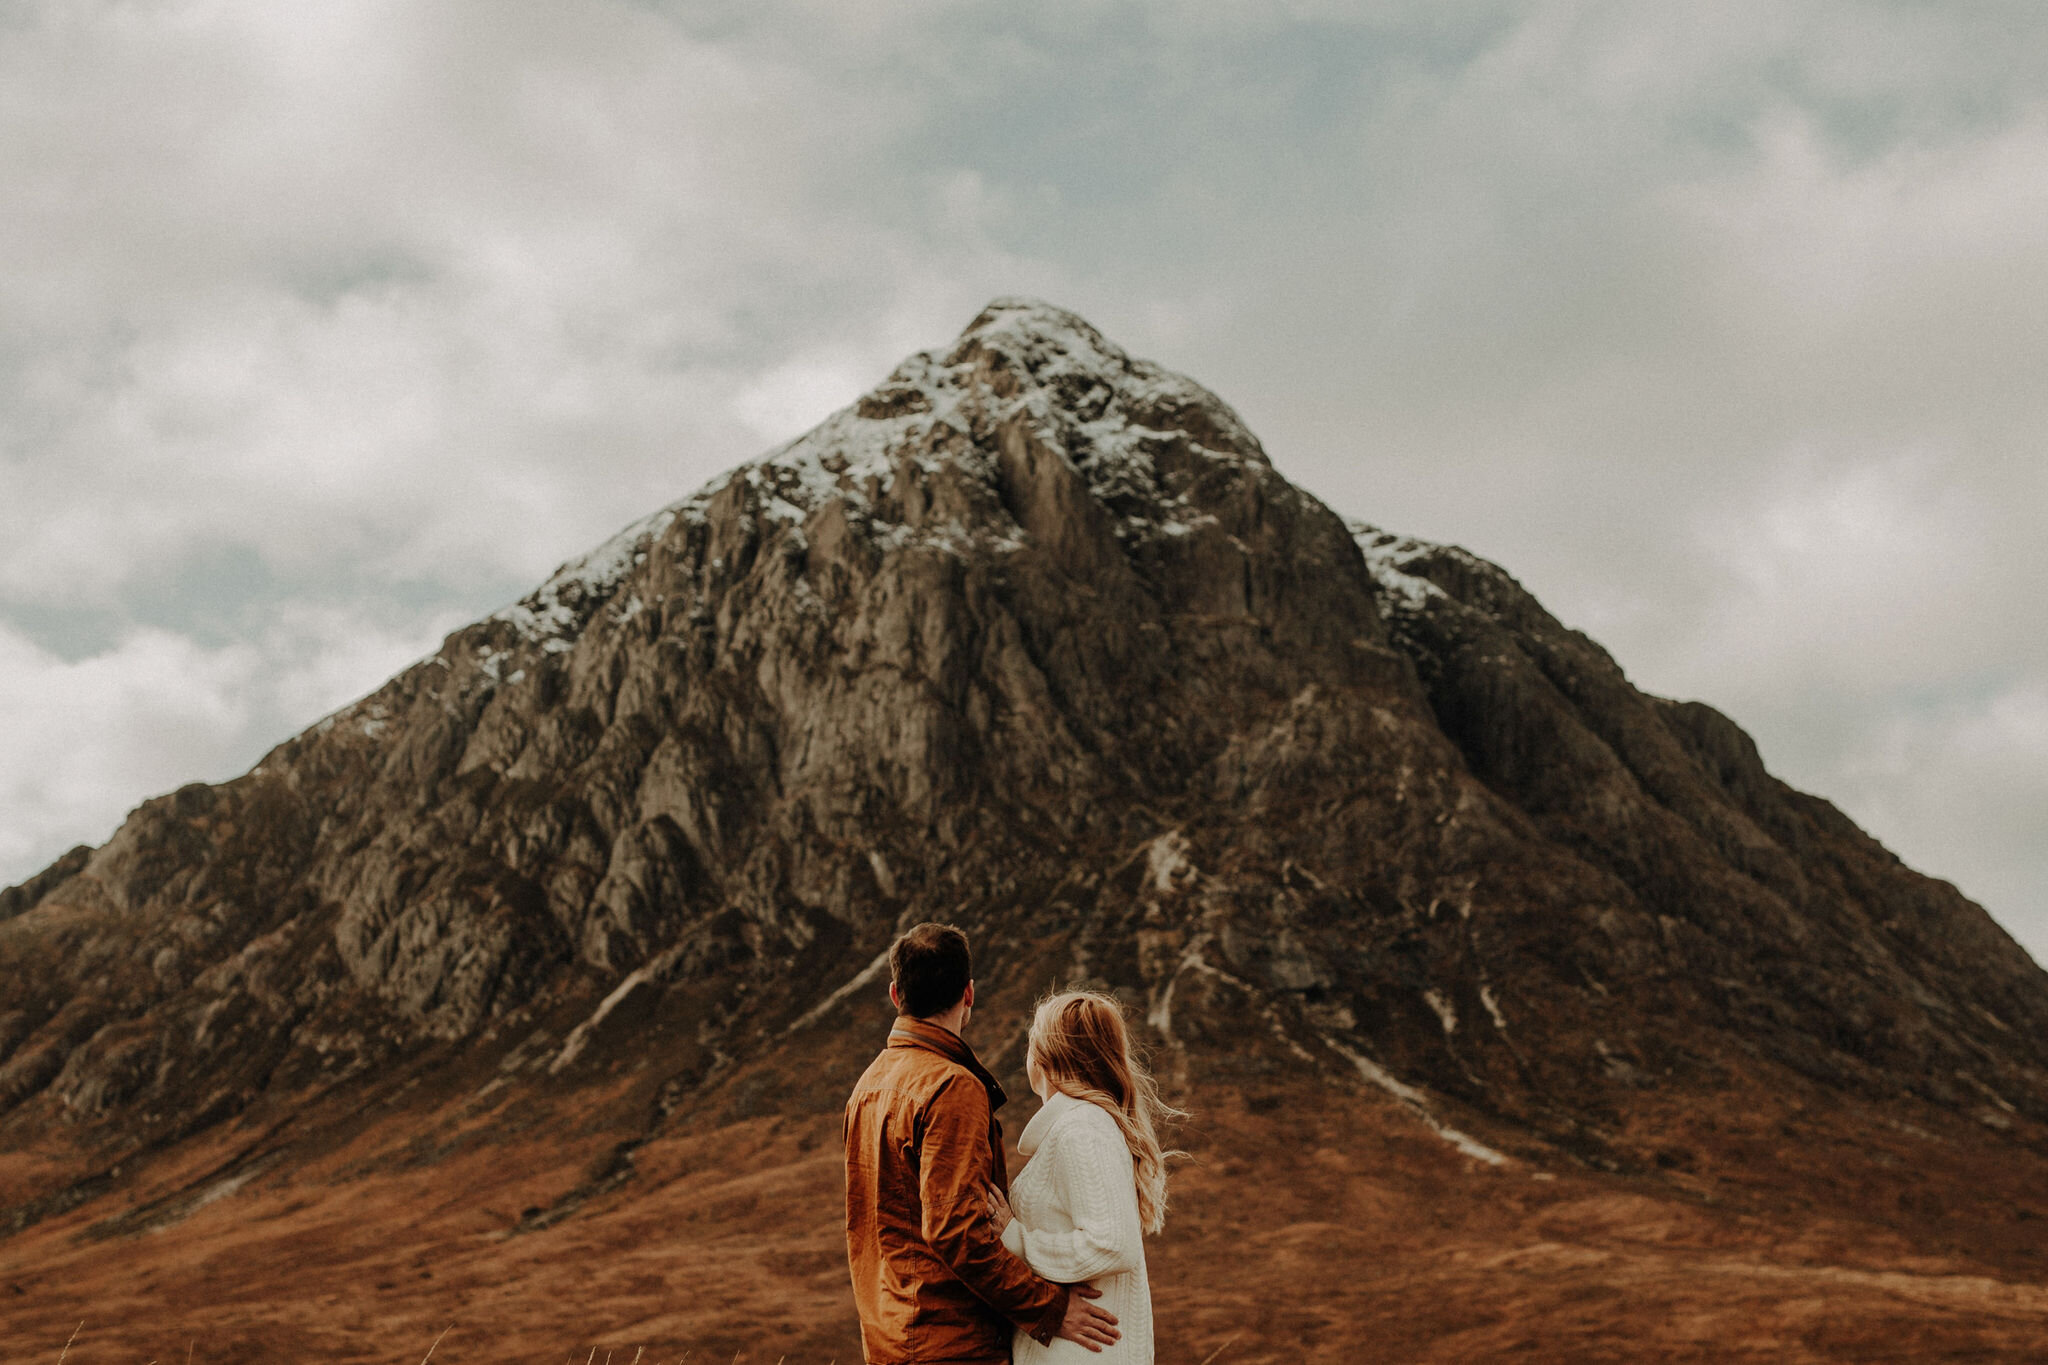  US couple in Scottish Highlands 